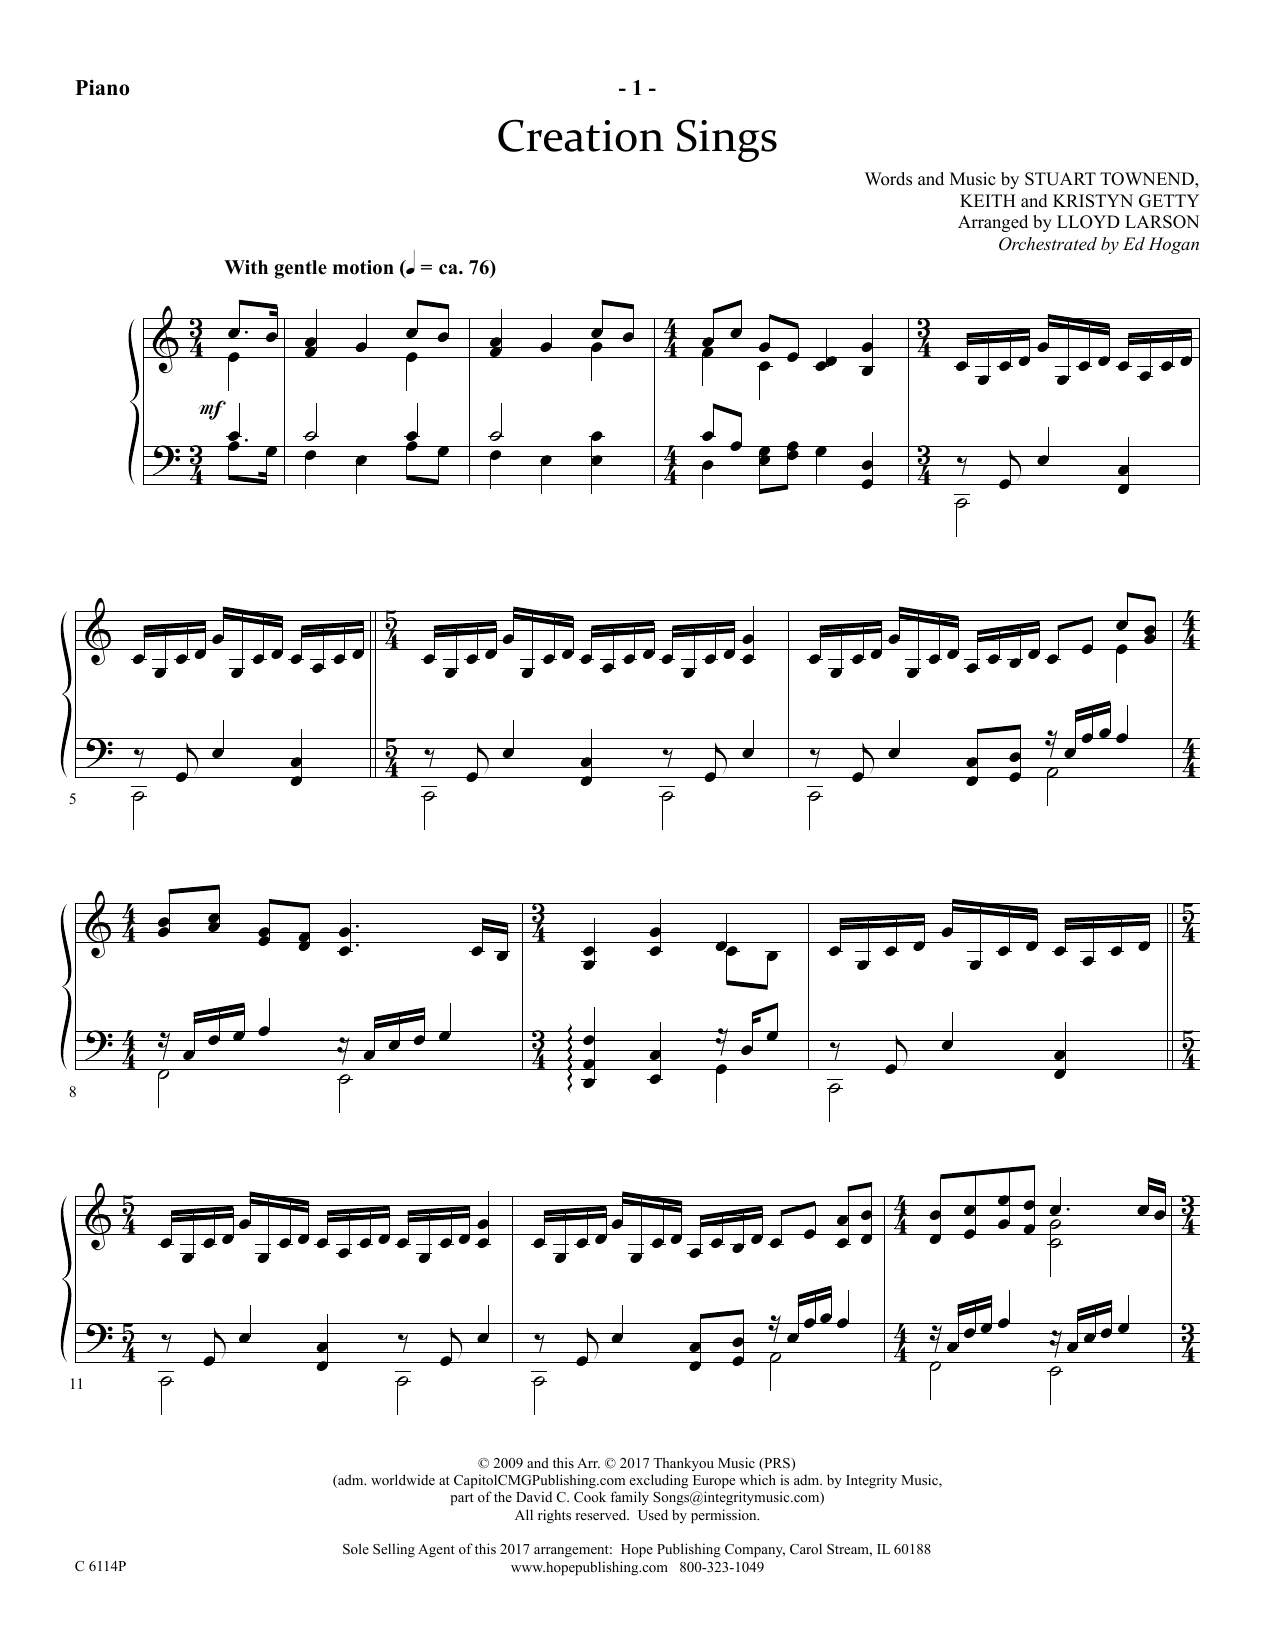 Lloyd Larson Creation Sings - Piano Sheet Music Notes & Chords for Choir Instrumental Pak - Download or Print PDF